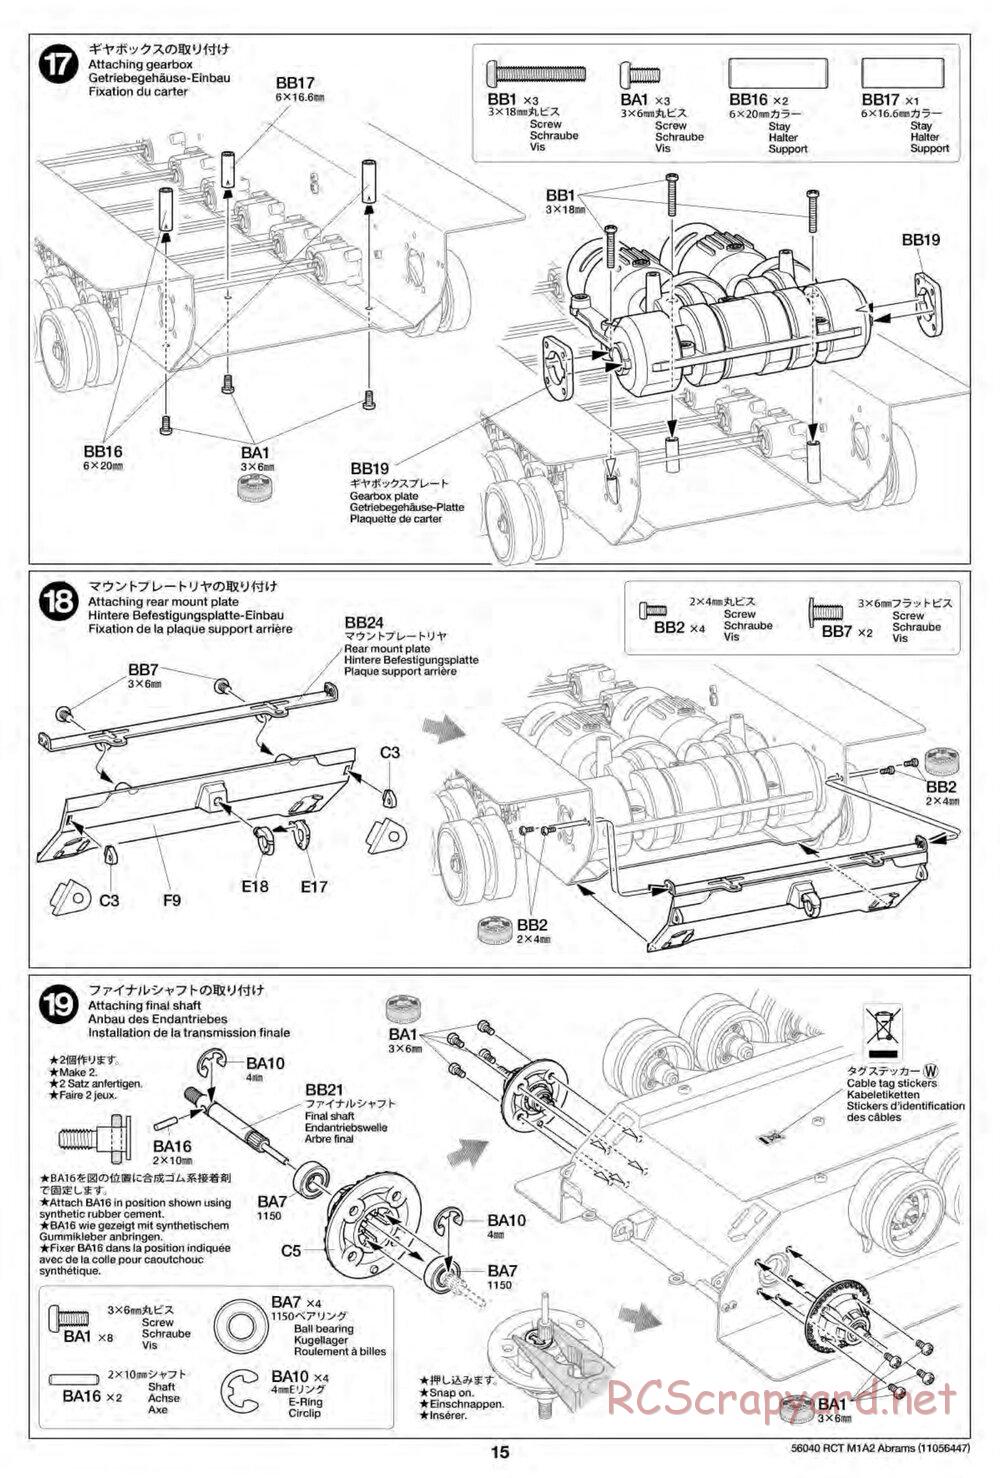 Tamiya - U.S. Main Battle Tank M1A2 Abrams - 1/16 Scale Chassis - Manual - Page 15